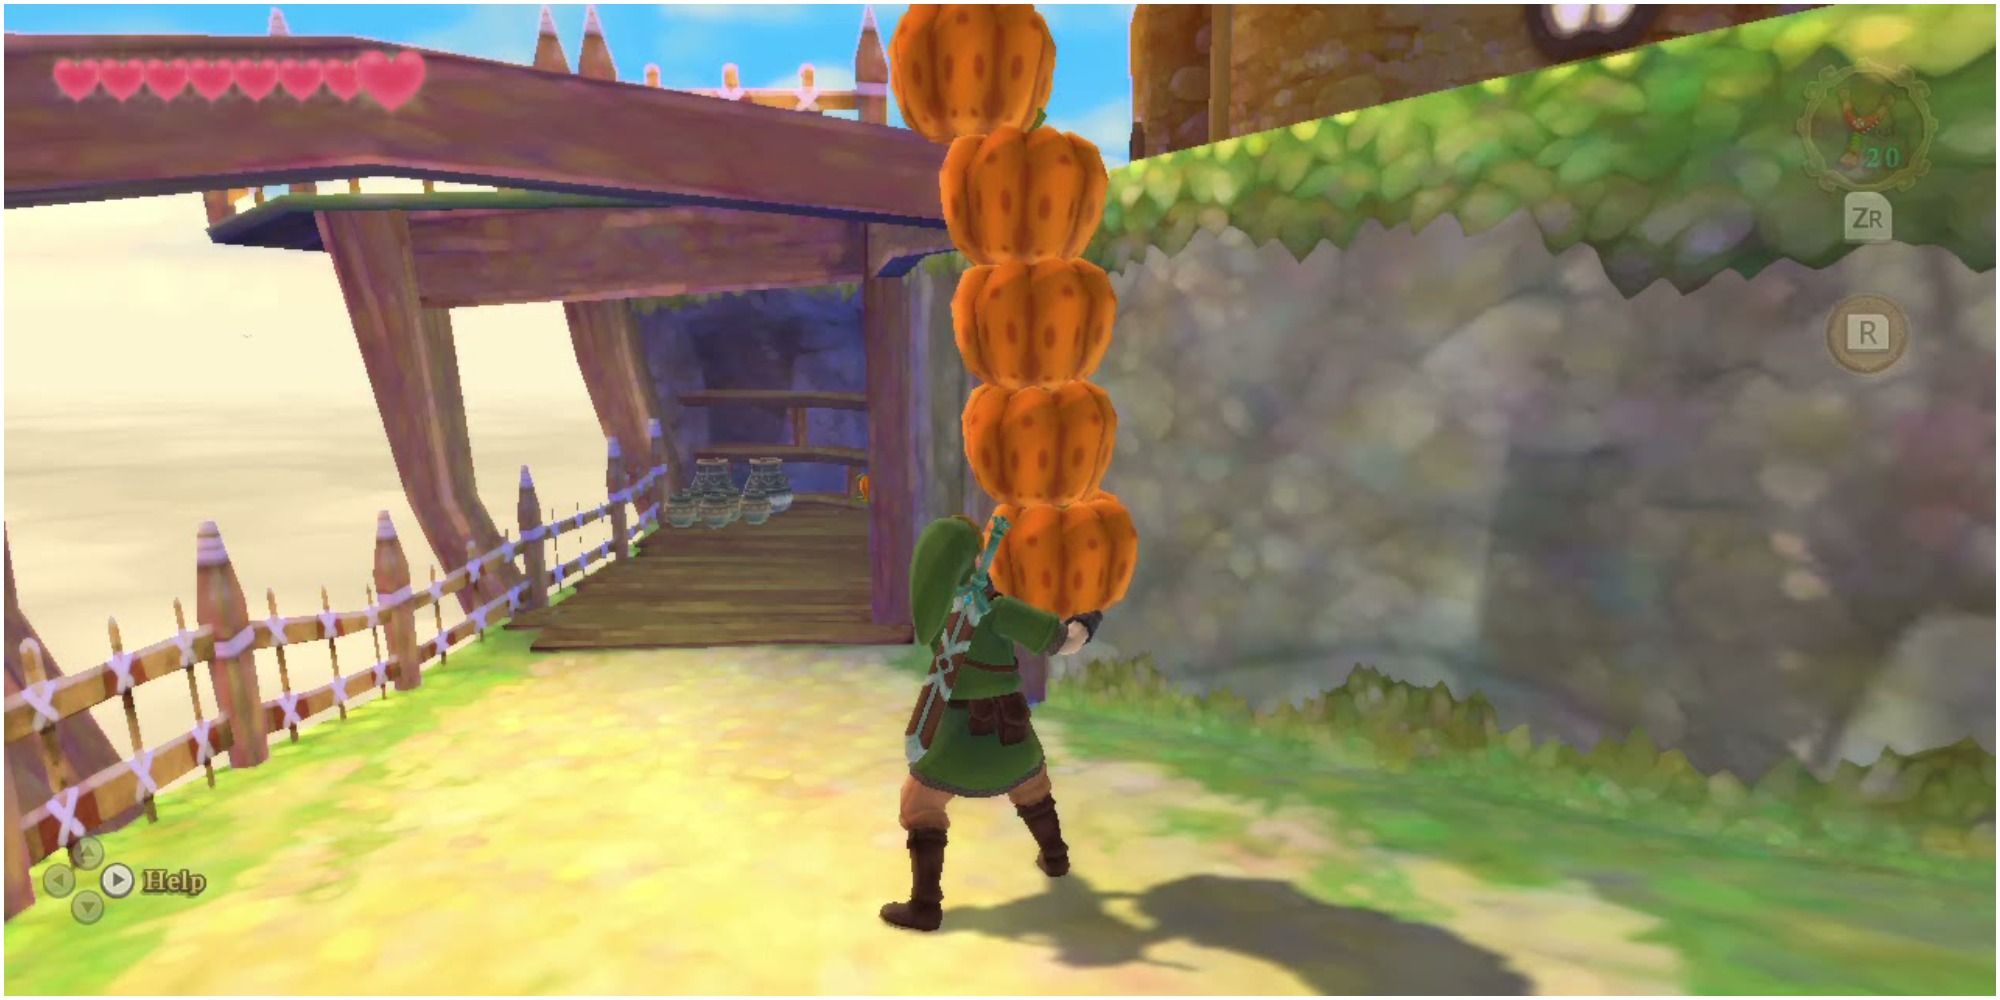 skyward sword - pumpkin balancing task 